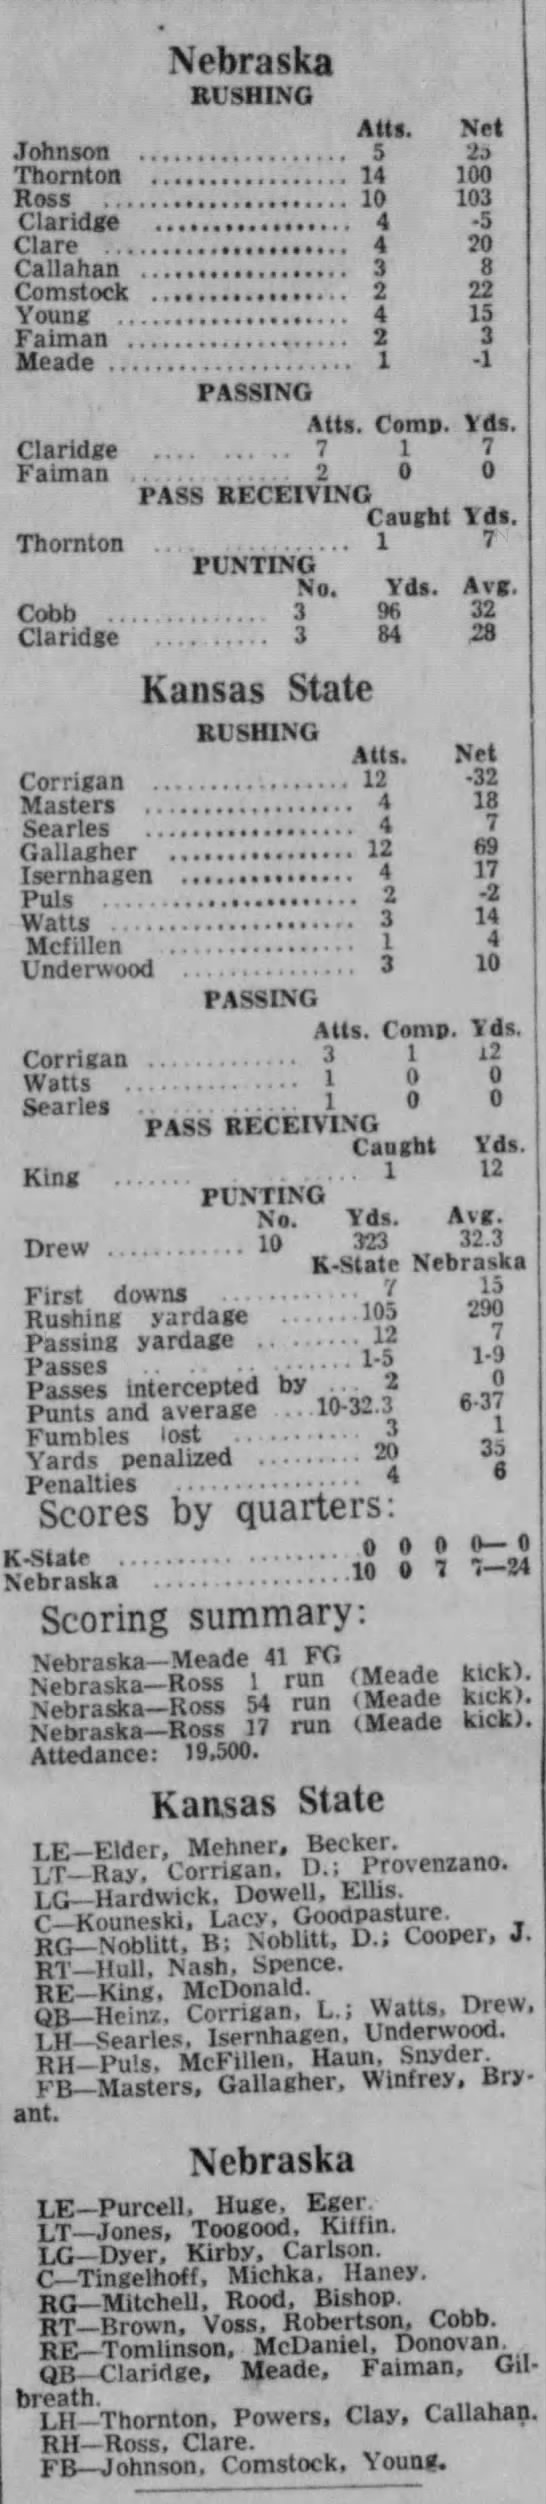 1961 Nebraska-Kansas State football game stats - 